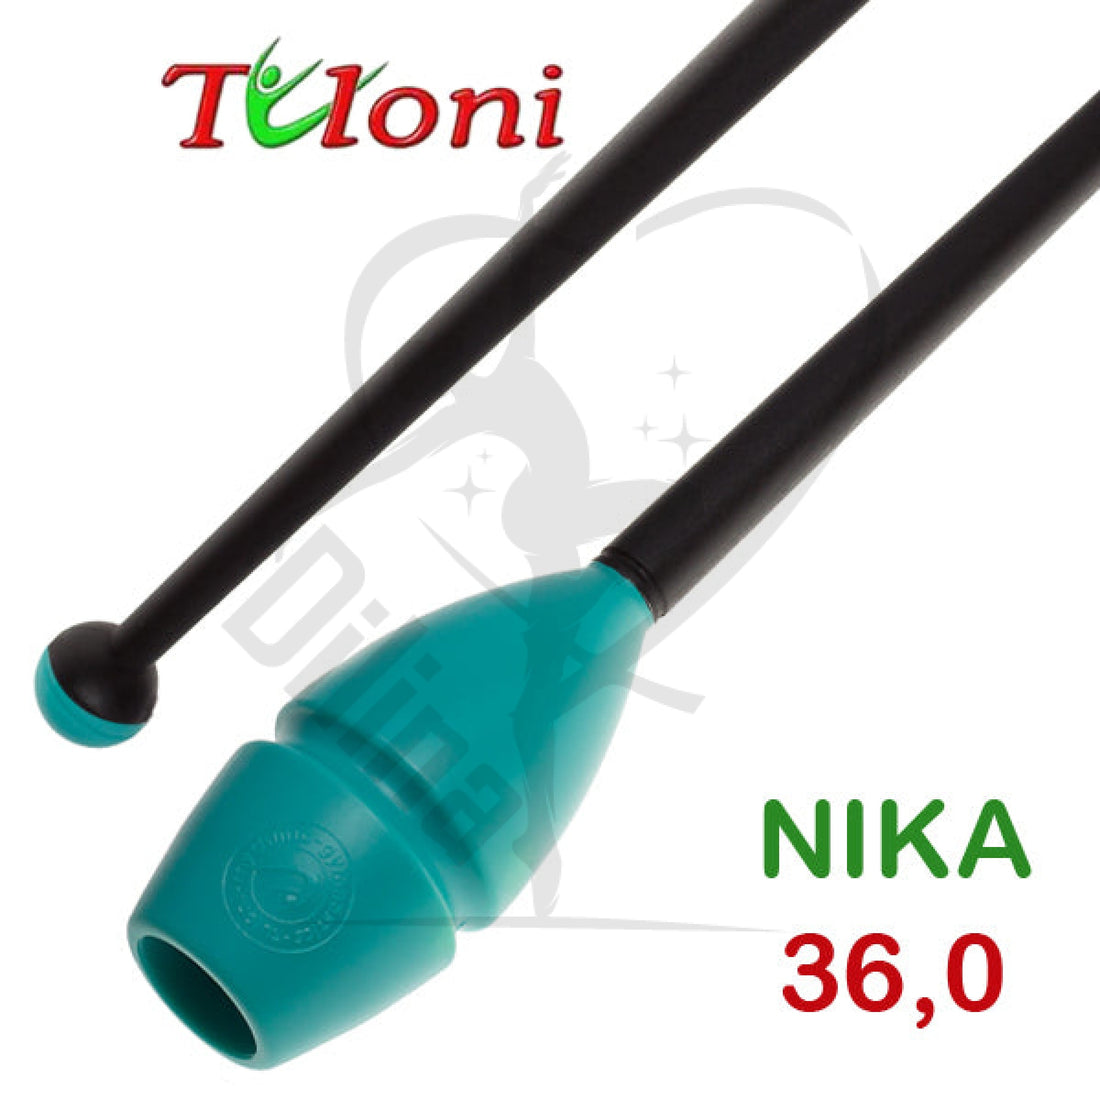 Tuloni Bi-Colour Connectable Clubs Mos. Nika 36Cm Turquoise X Black